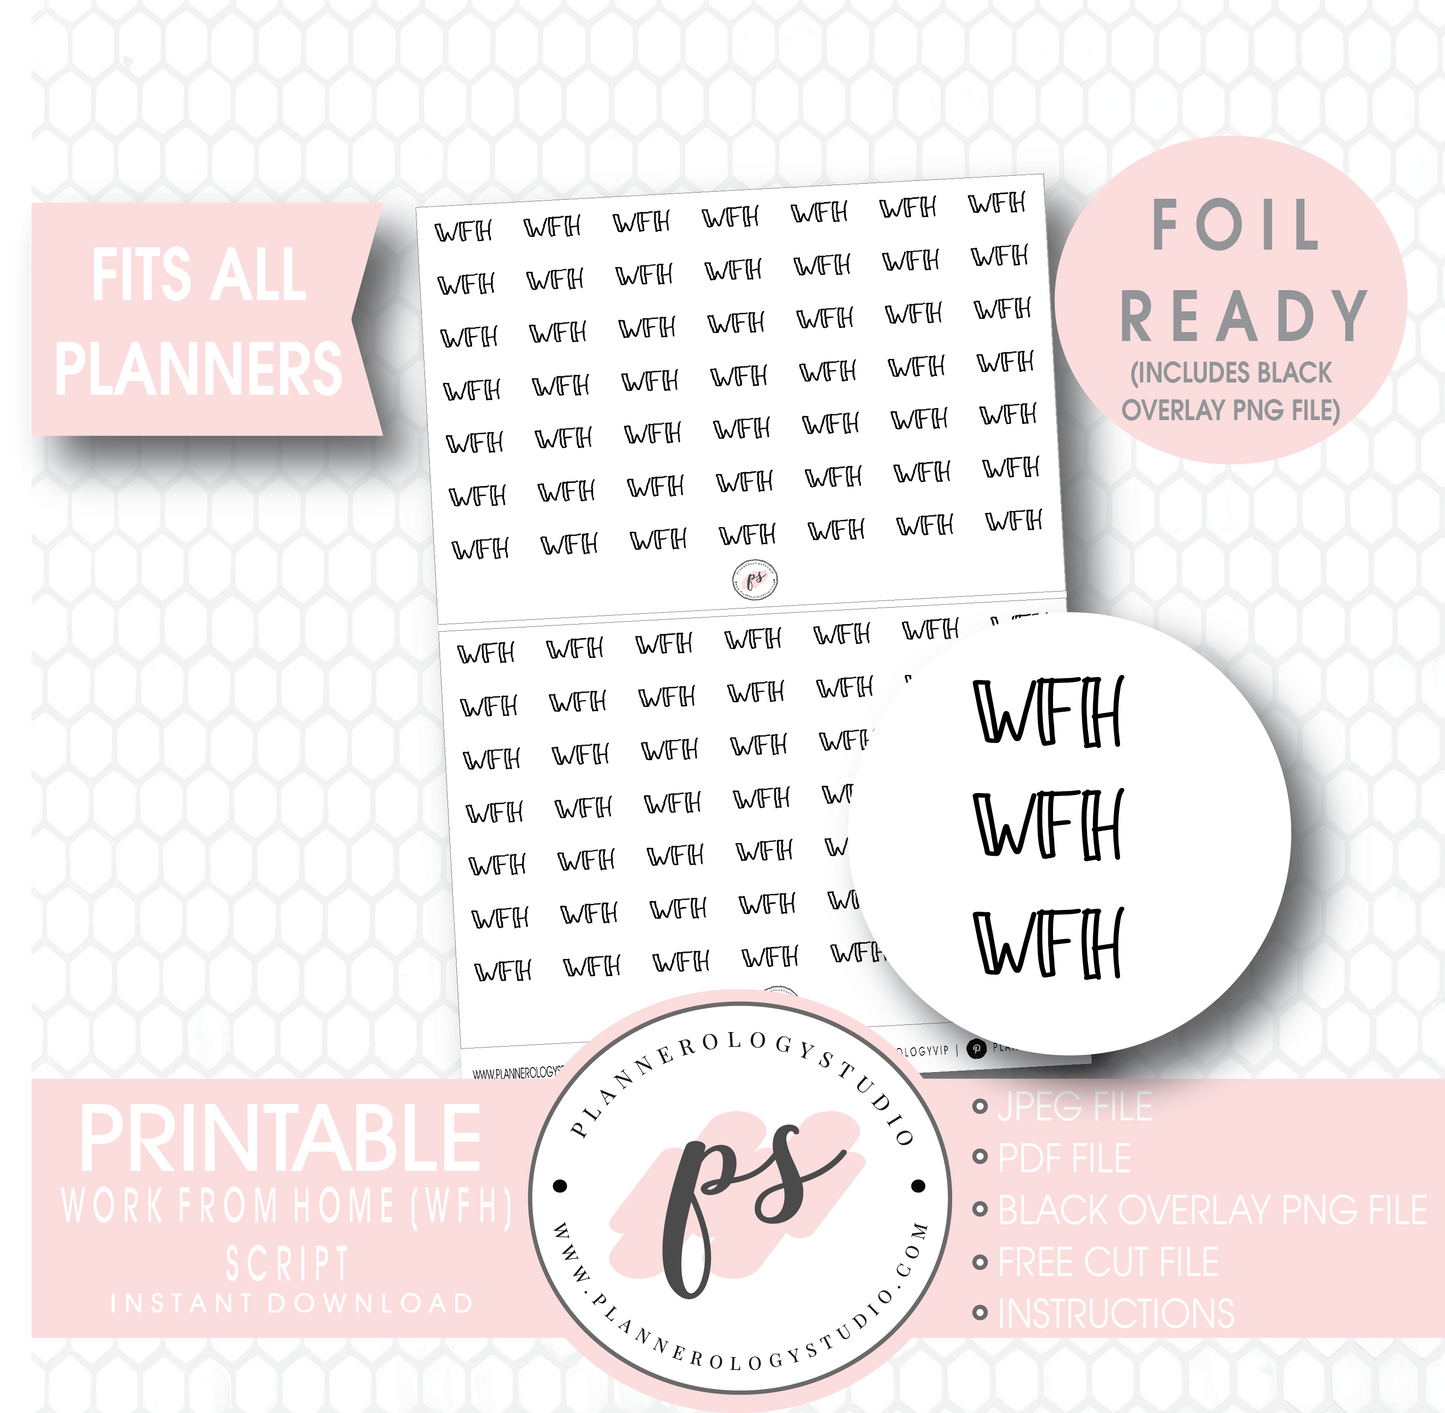 WFH (Work from Home) Bujo Script Digital Printable Planner Stickers (Foil Ready) - Plannerologystudio